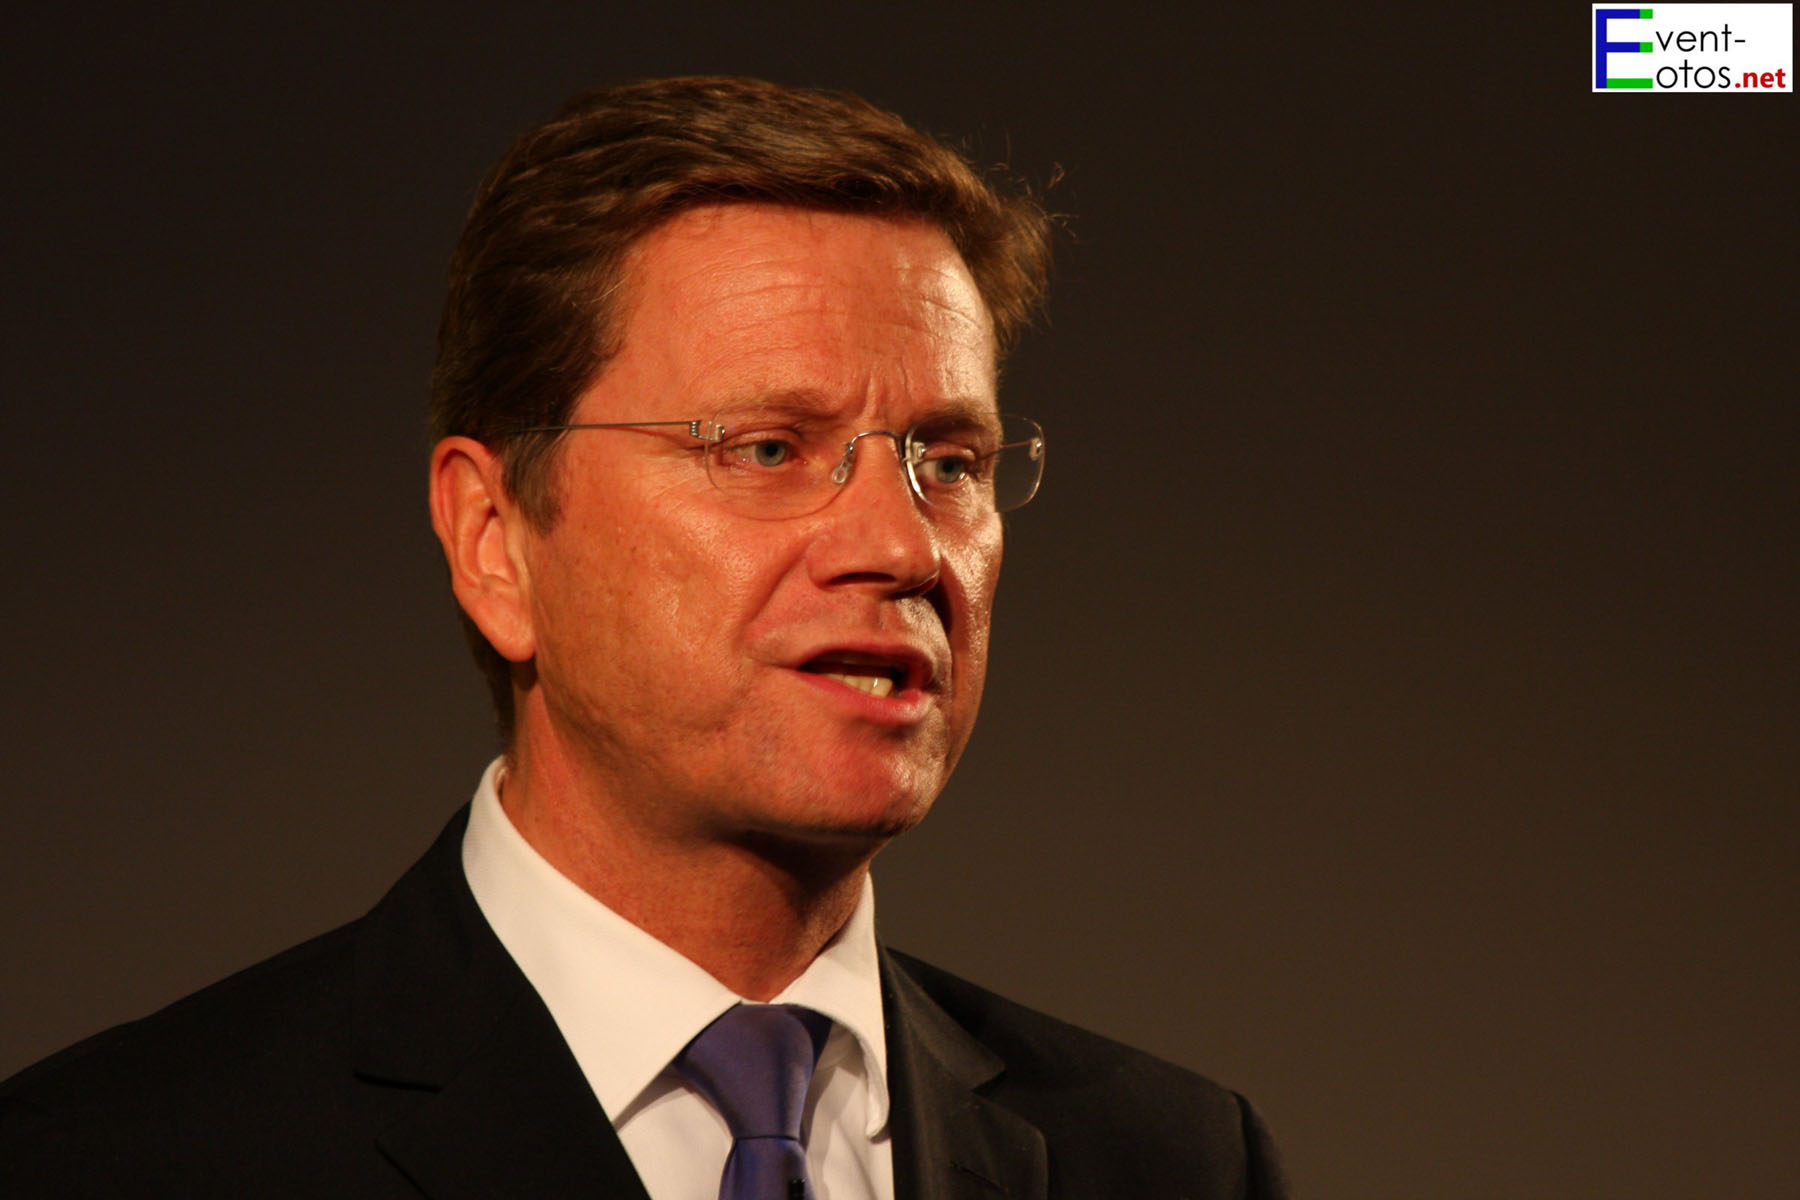 Guido Westerwelle (FDP)
